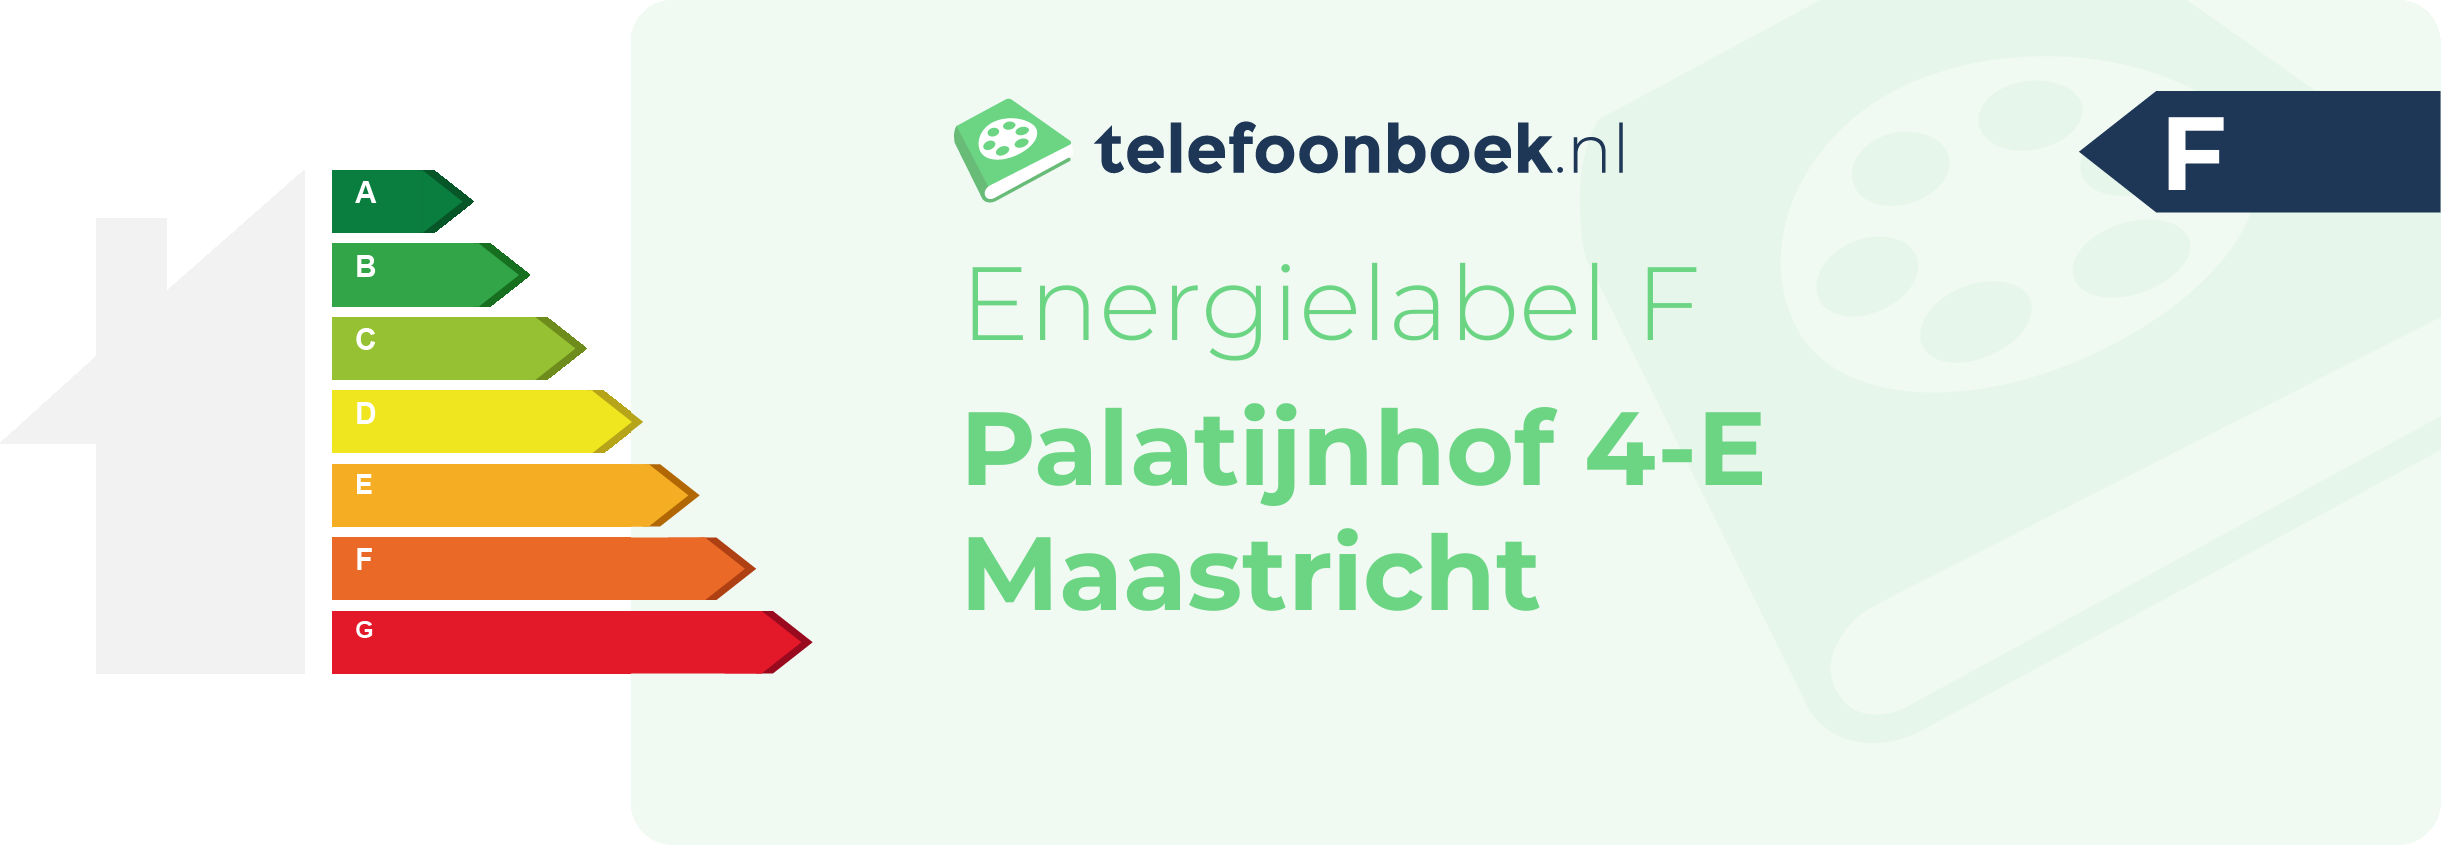 Energielabel Palatijnhof 4-E Maastricht